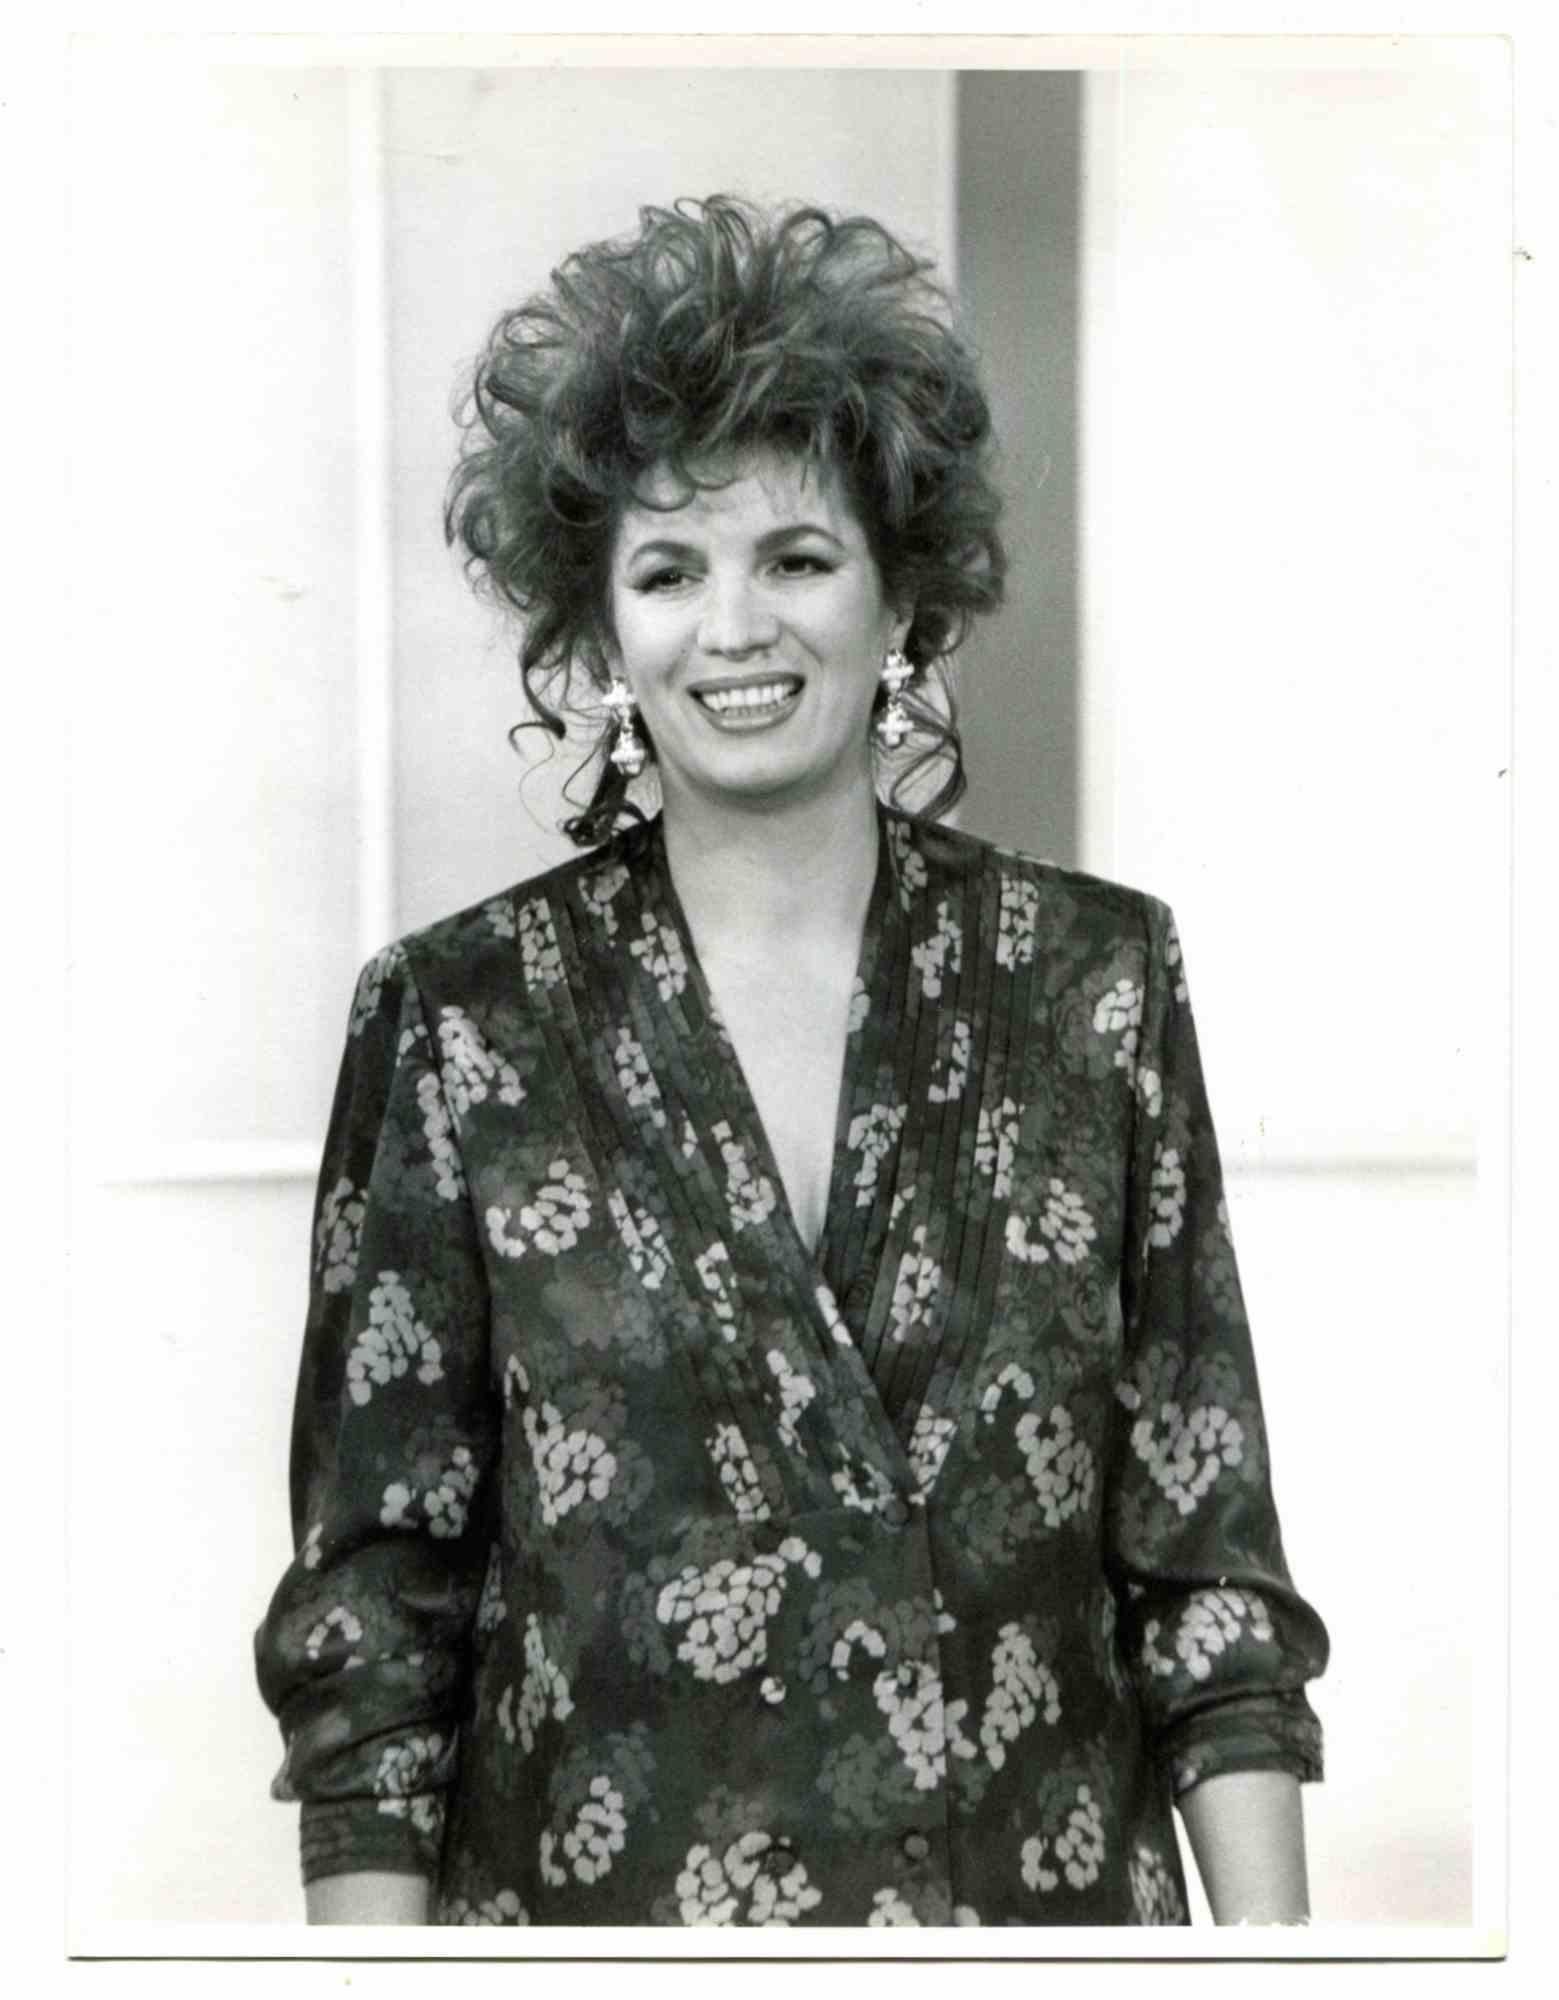 Unknown Portrait Photograph - Photo of Iva Zanicchi - Vintage Photo - 1980s